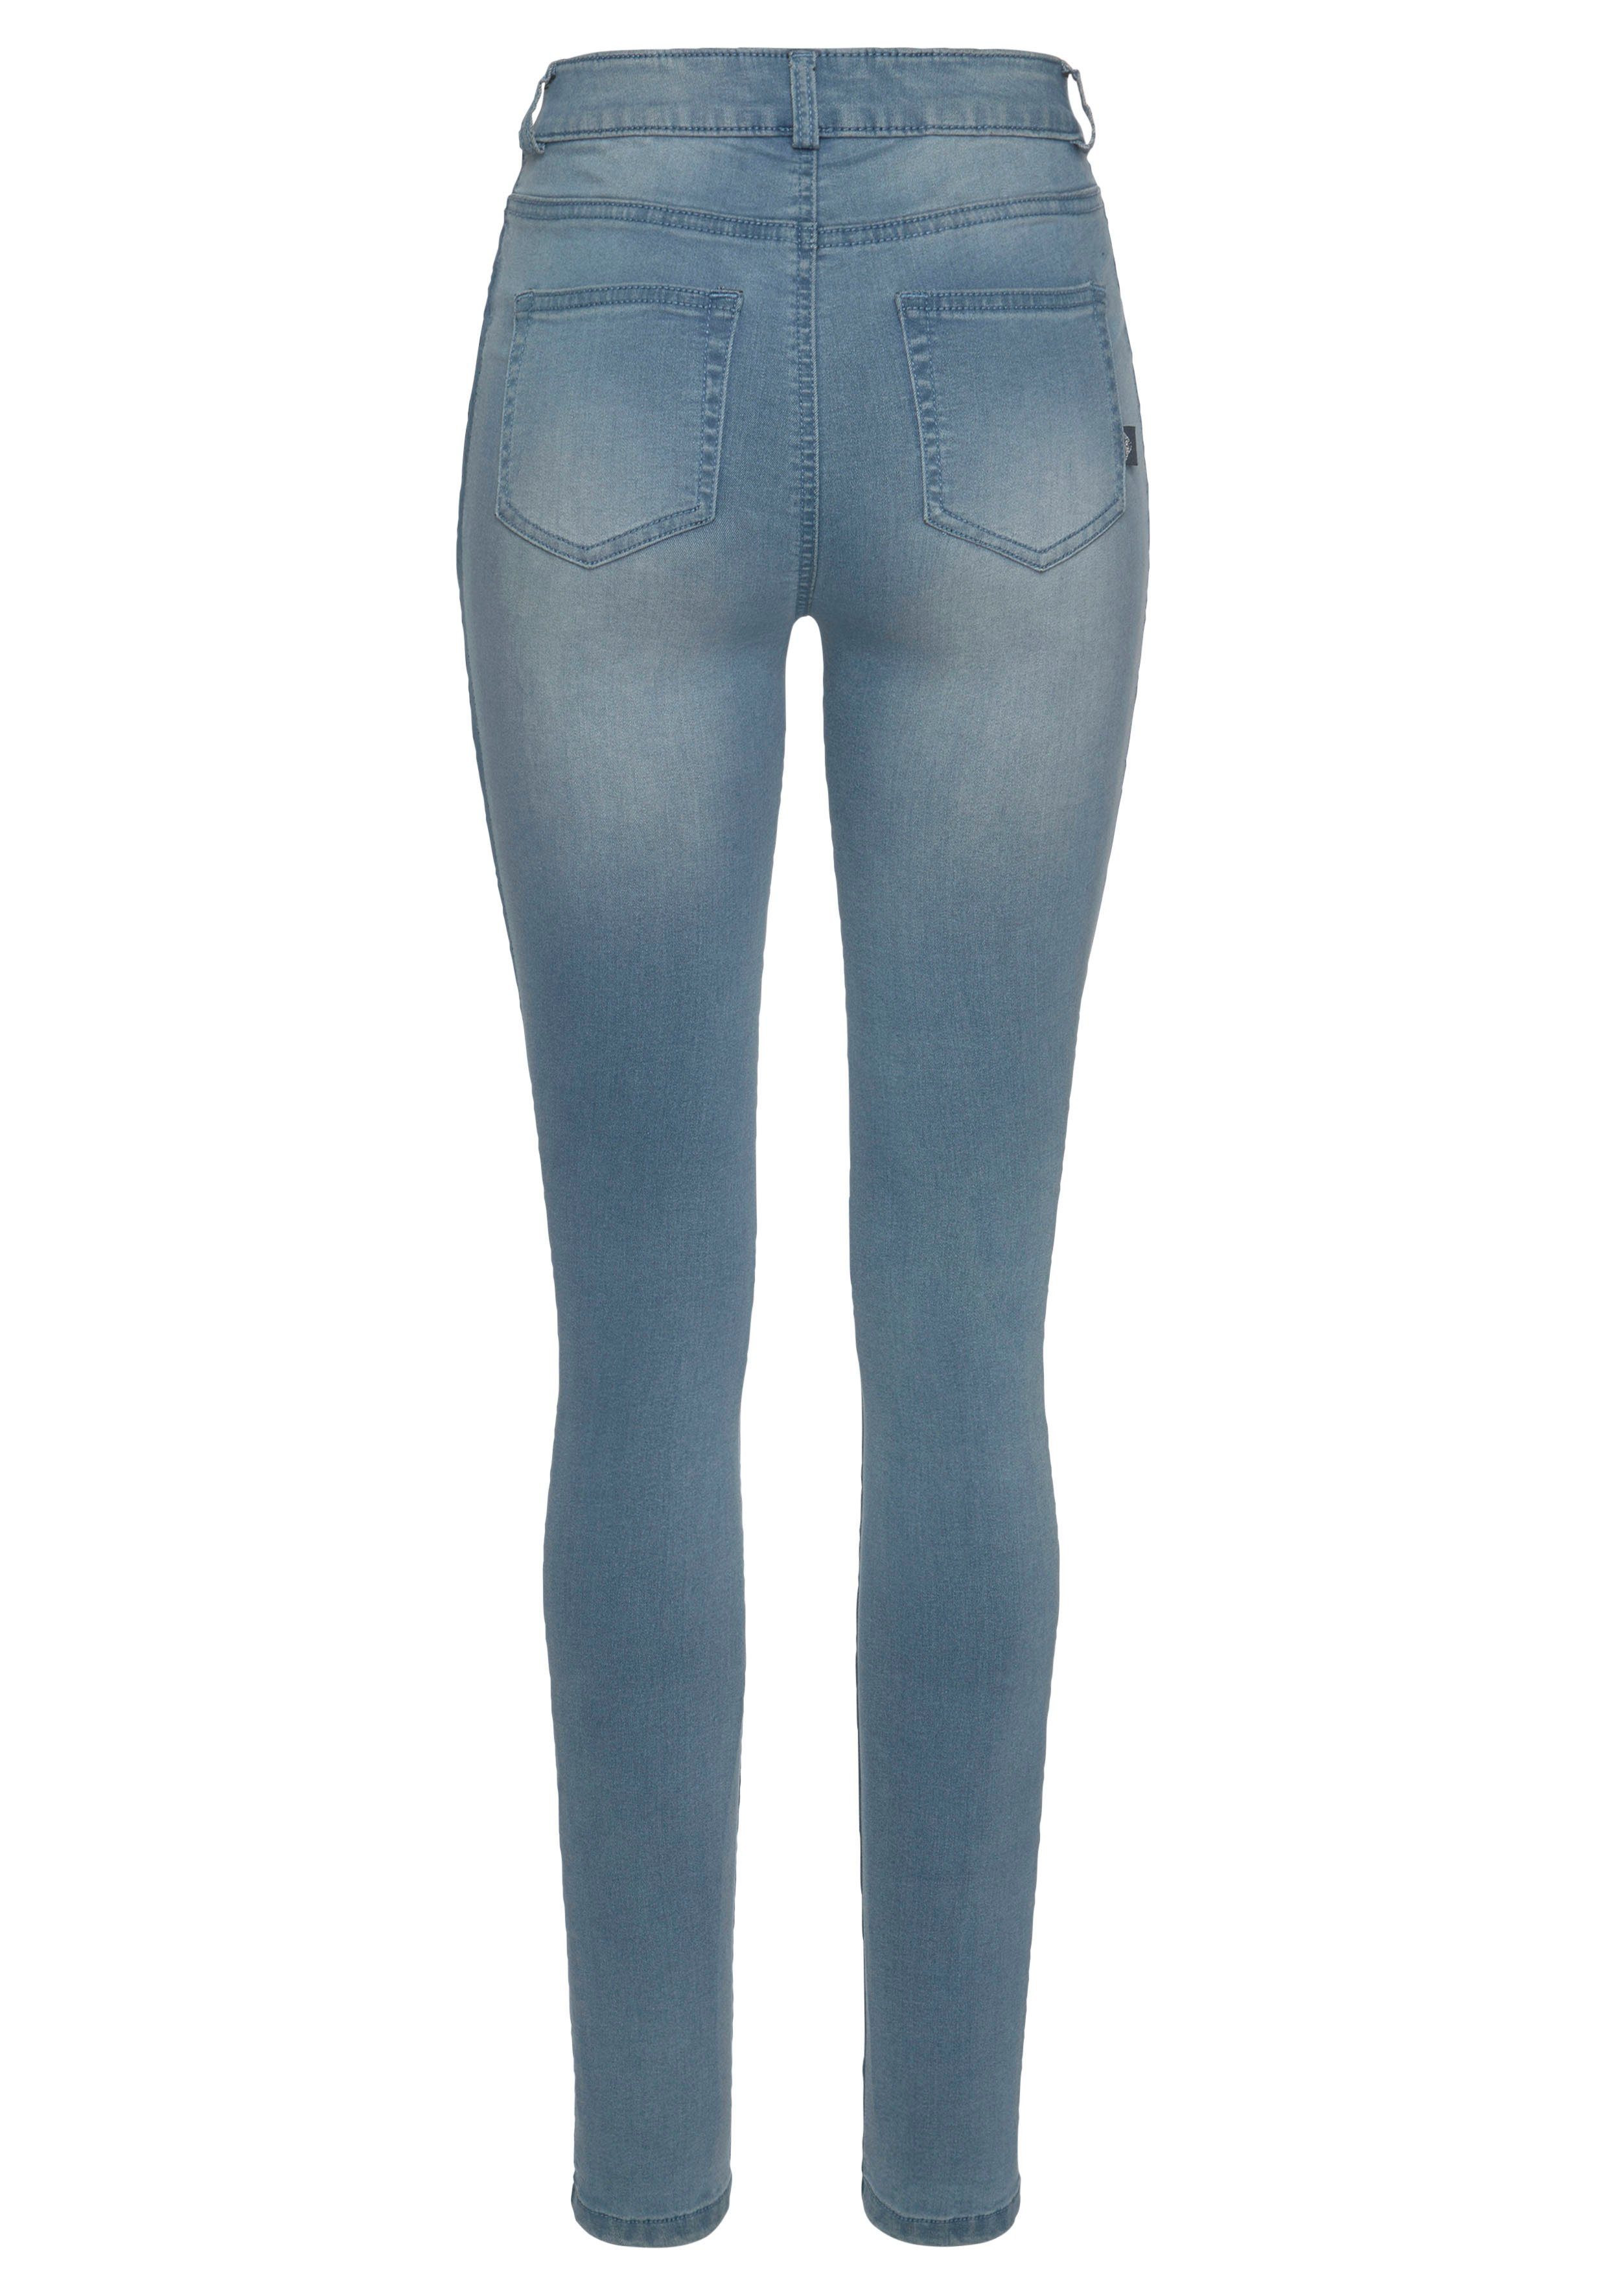 Arizona High Streifen blue-used seitlichem Skinny-fit-Jeans Stretch Waist mit Ultra